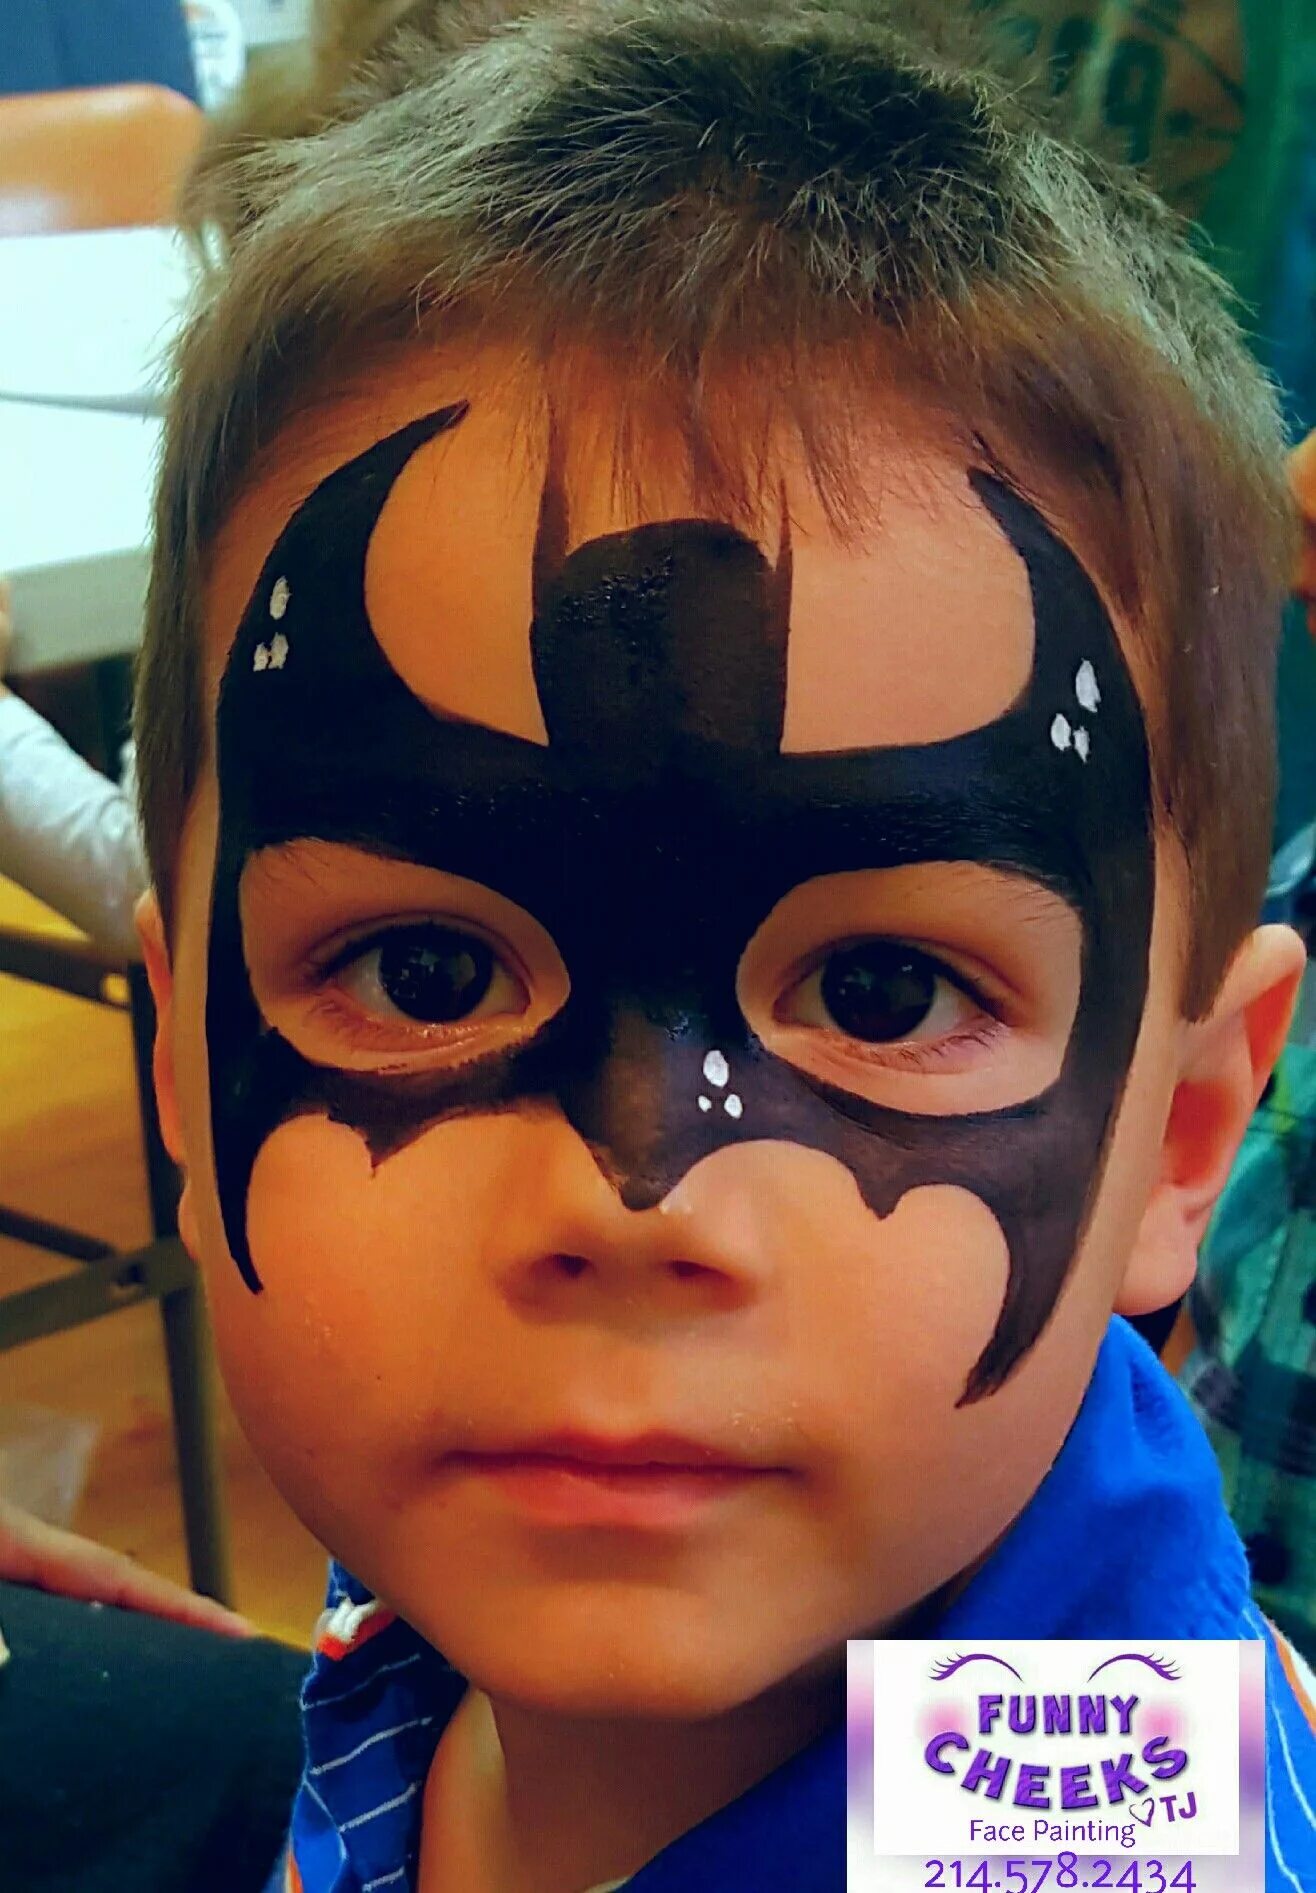 Аквагрим Бэтмен для детей. Бэтмен аквагрим на лице. Маска Бэтмена аквагрим. Бэтмен грим для детей. Грим бэтмена